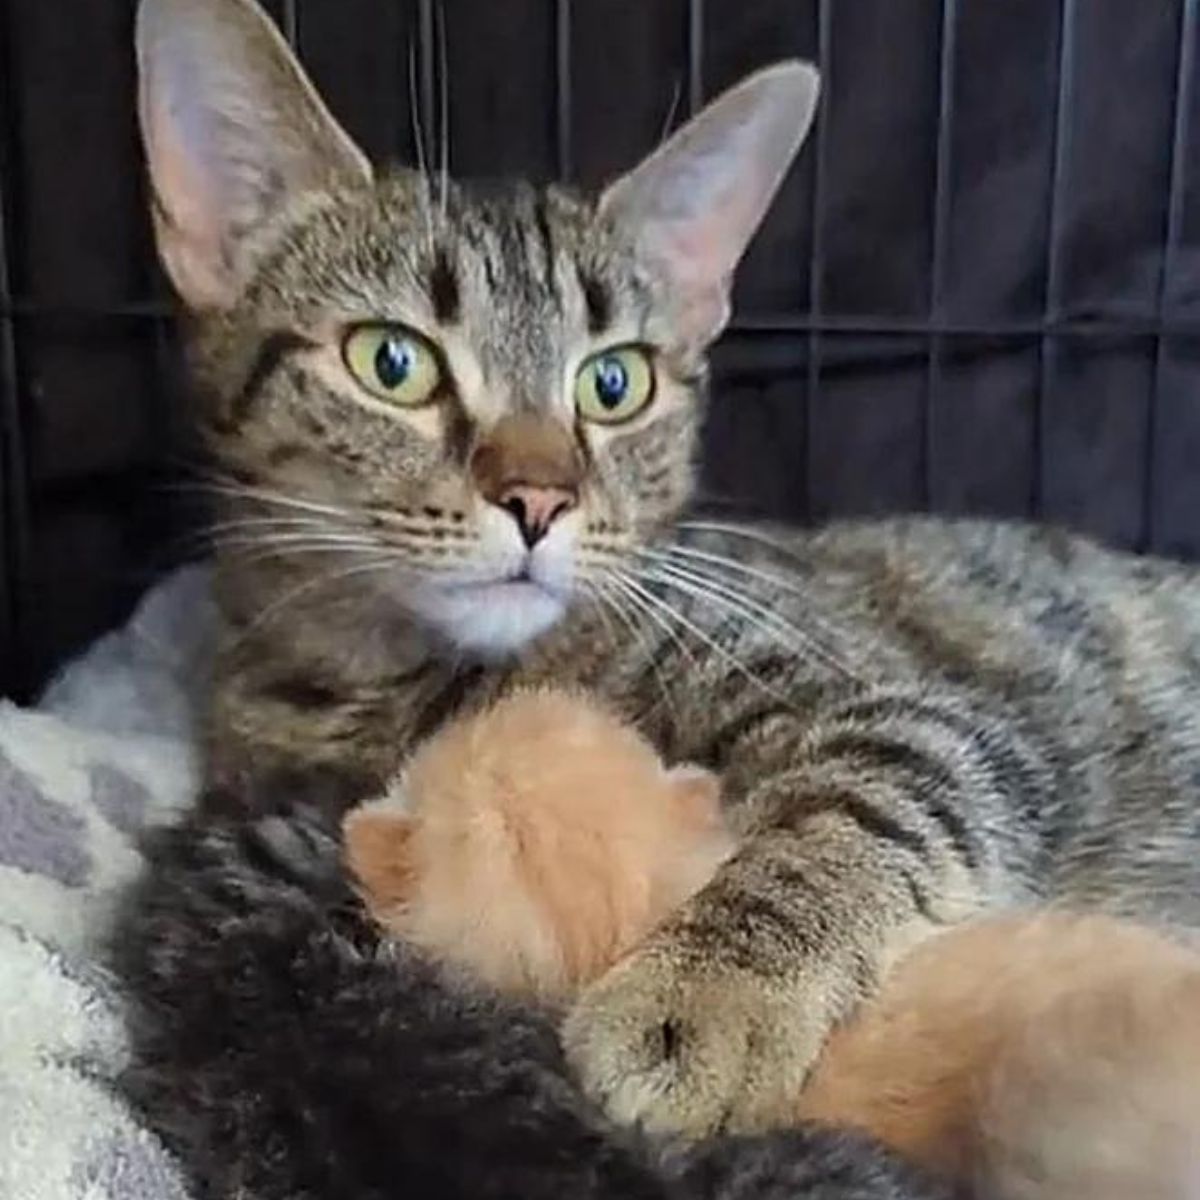 cat cuddling an orange kitten